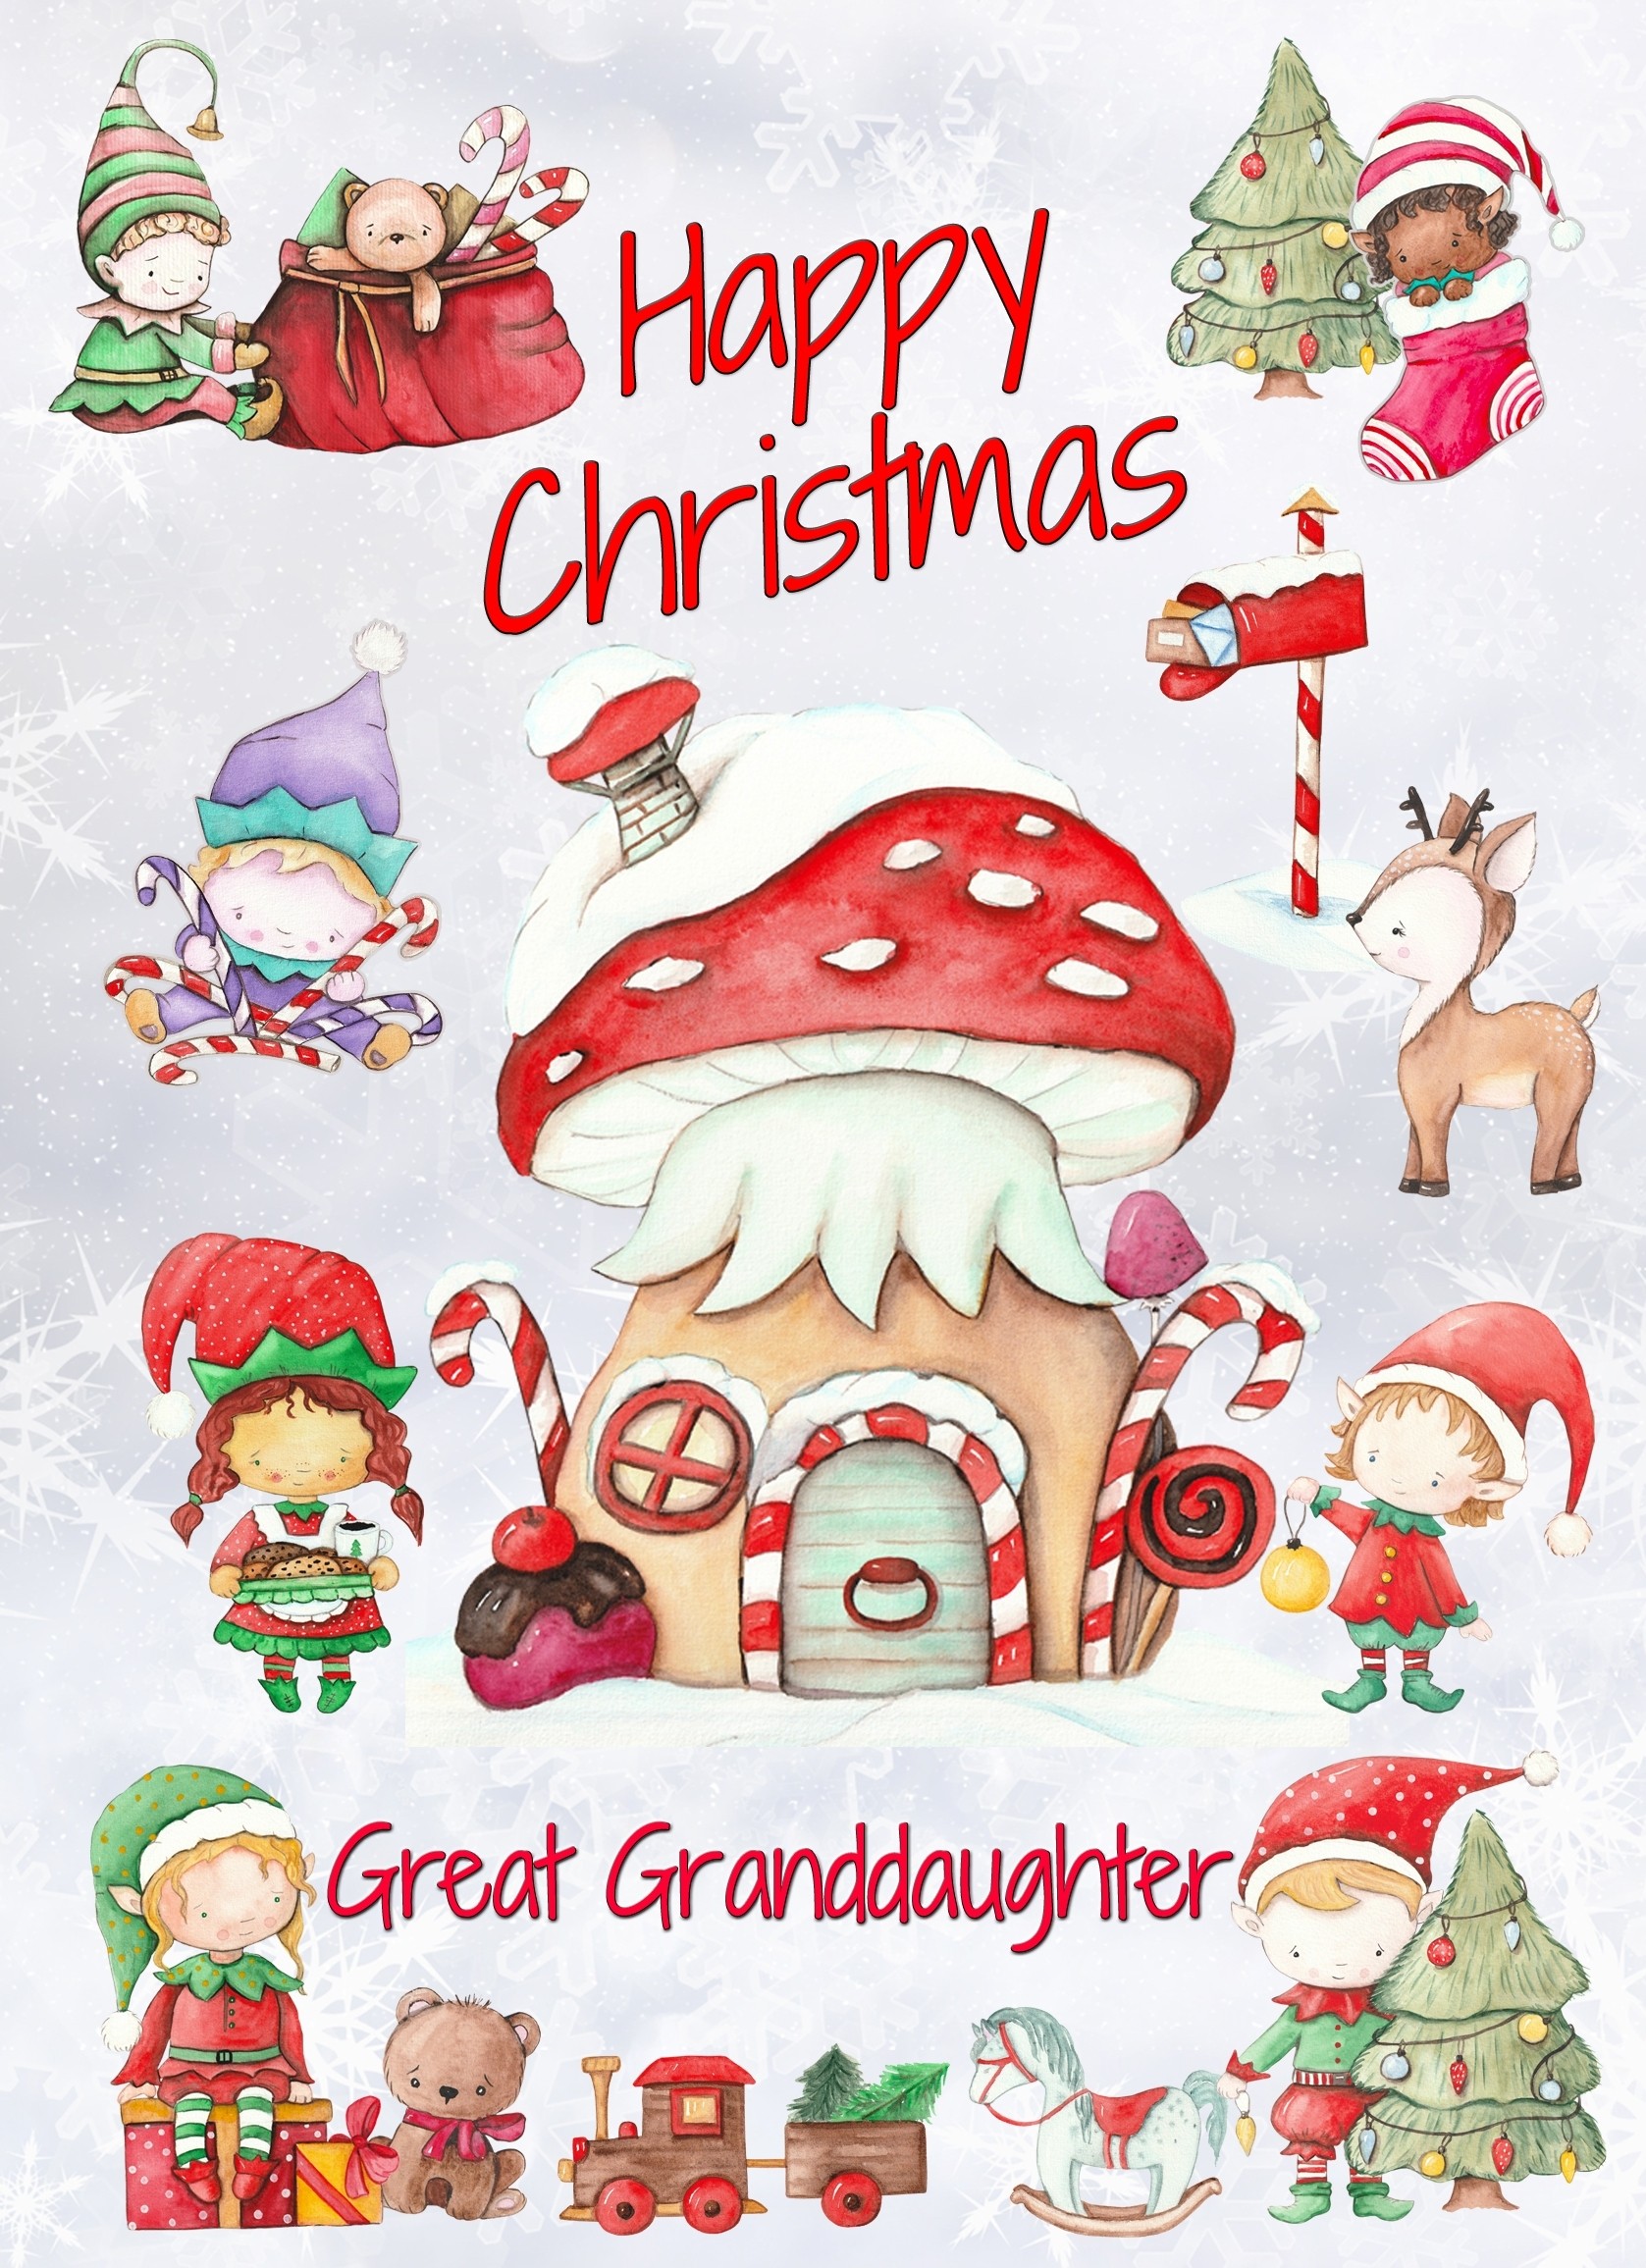 Christmas Card For Great Granddaughter (Elf, White)